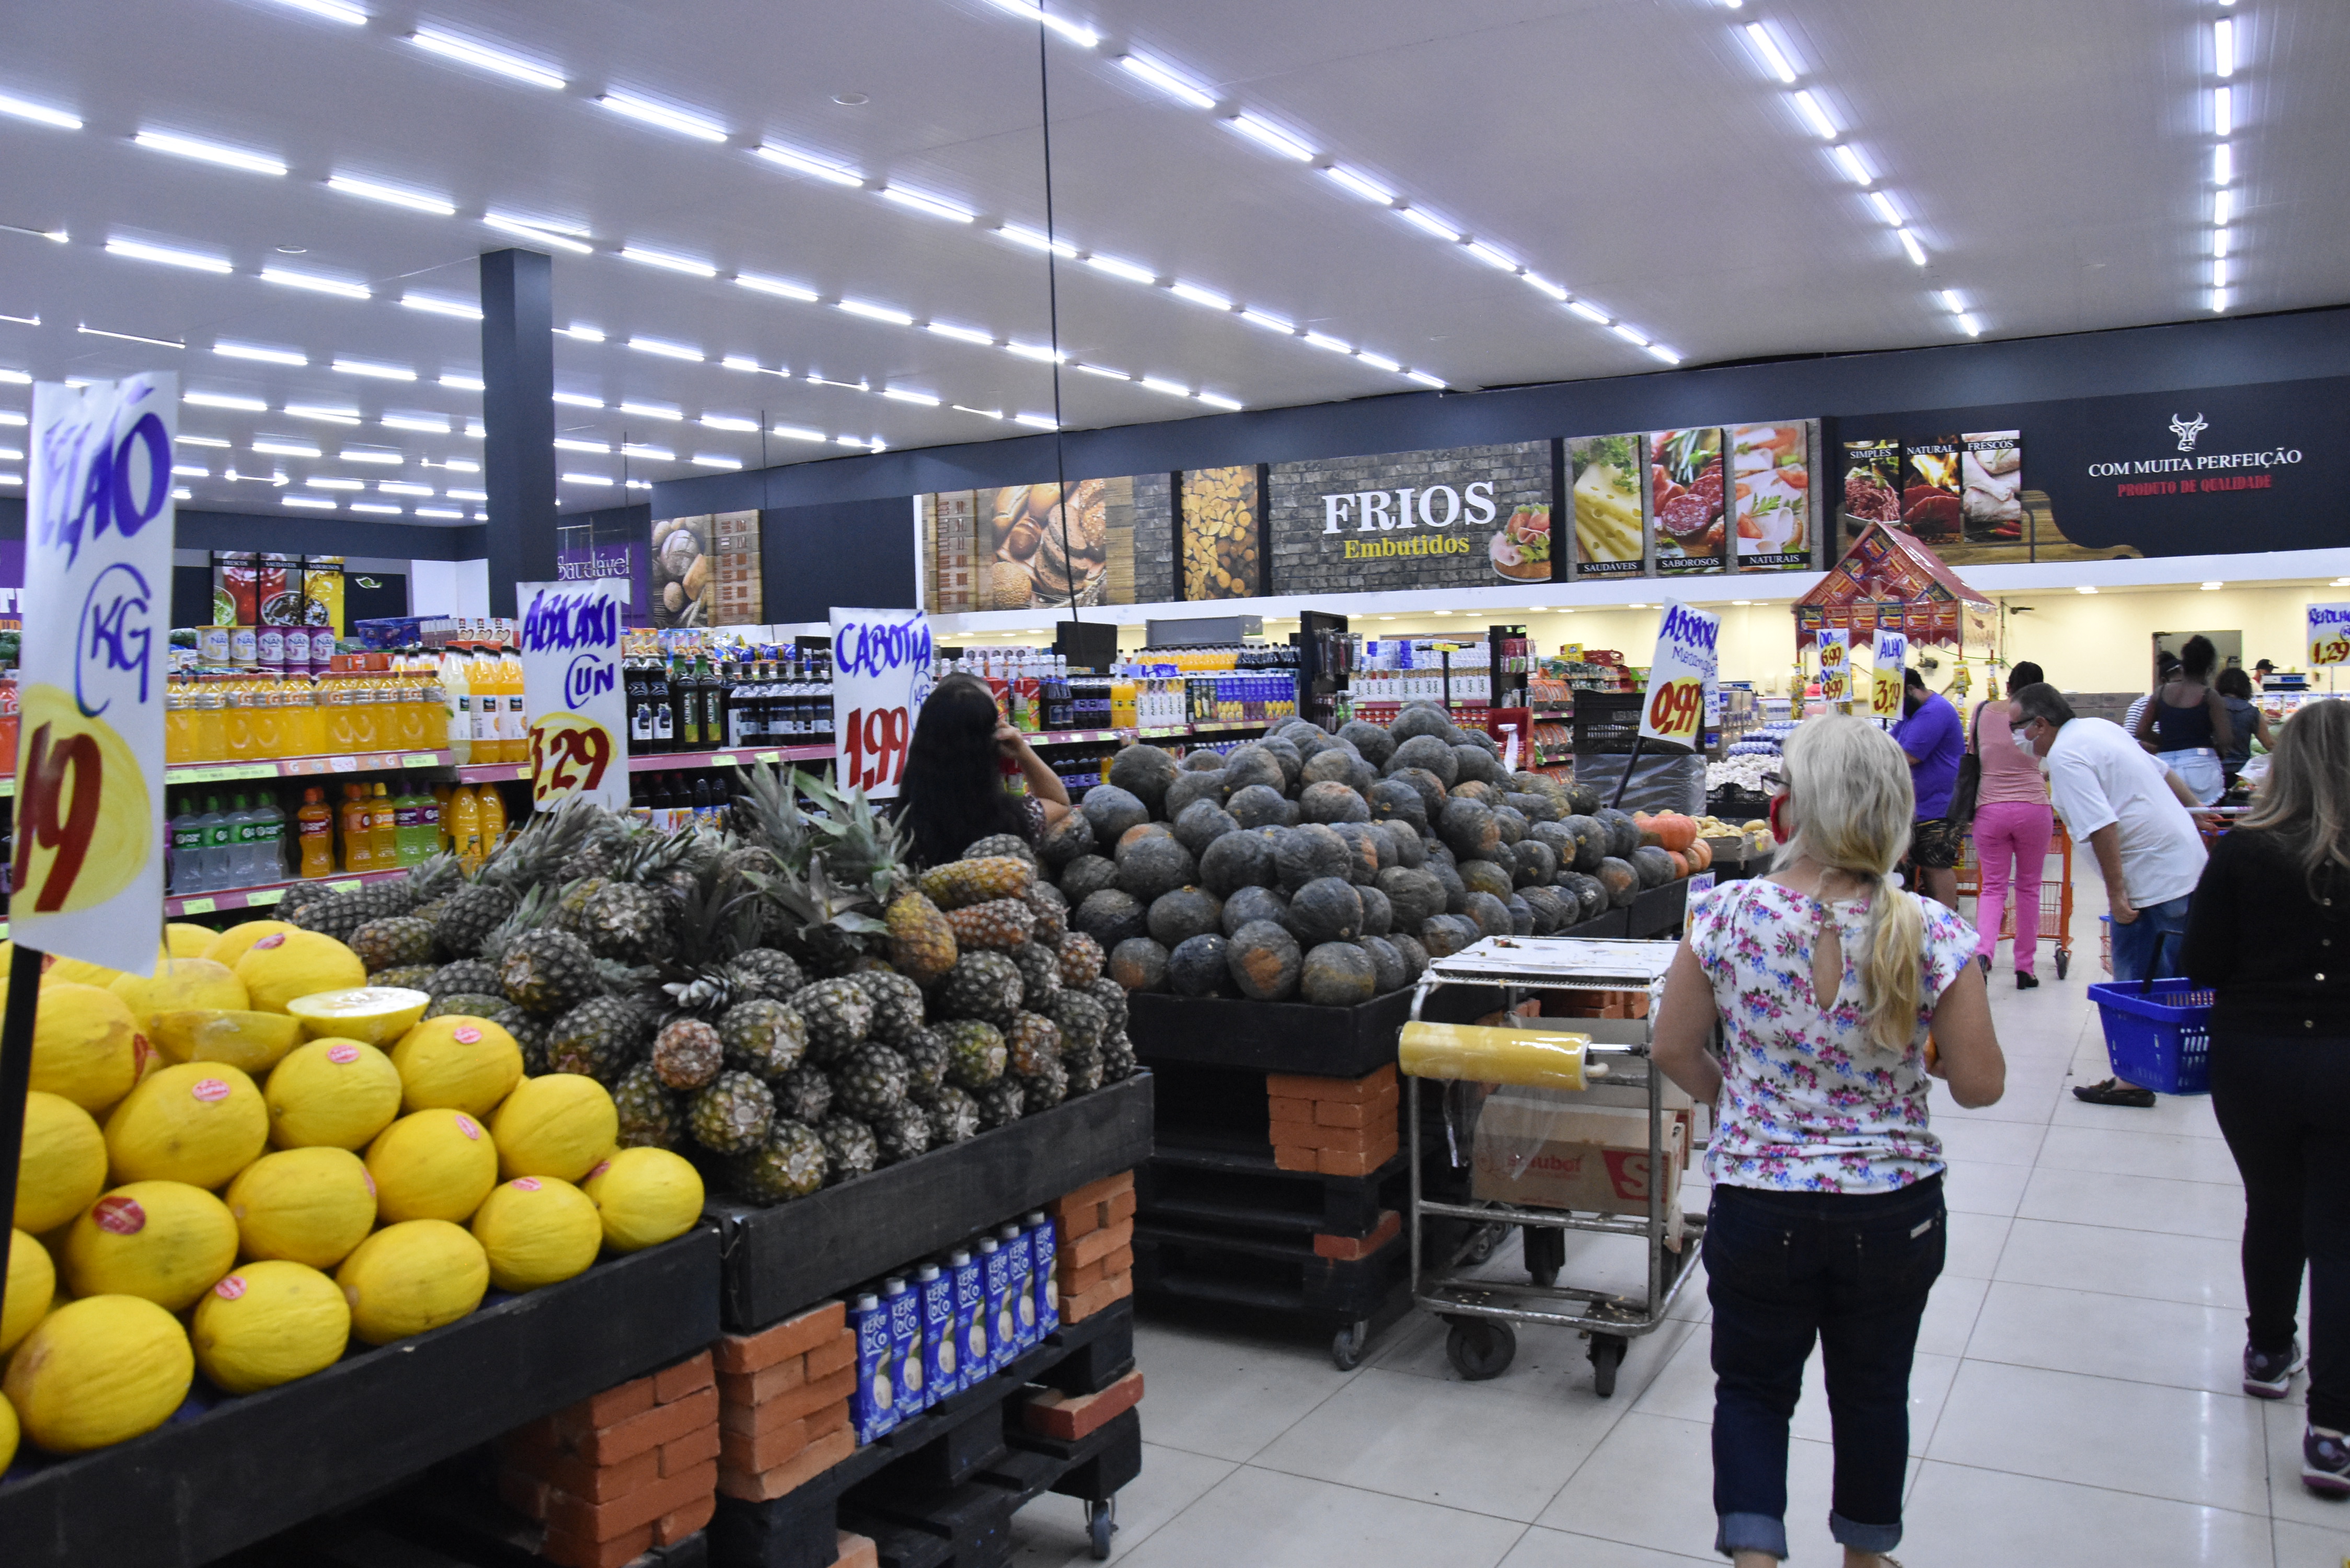 O crescimento significativo do comércio nos últimos meses demonstra que boa parte da renda familiar foi redirecionada para fora dos supermercados